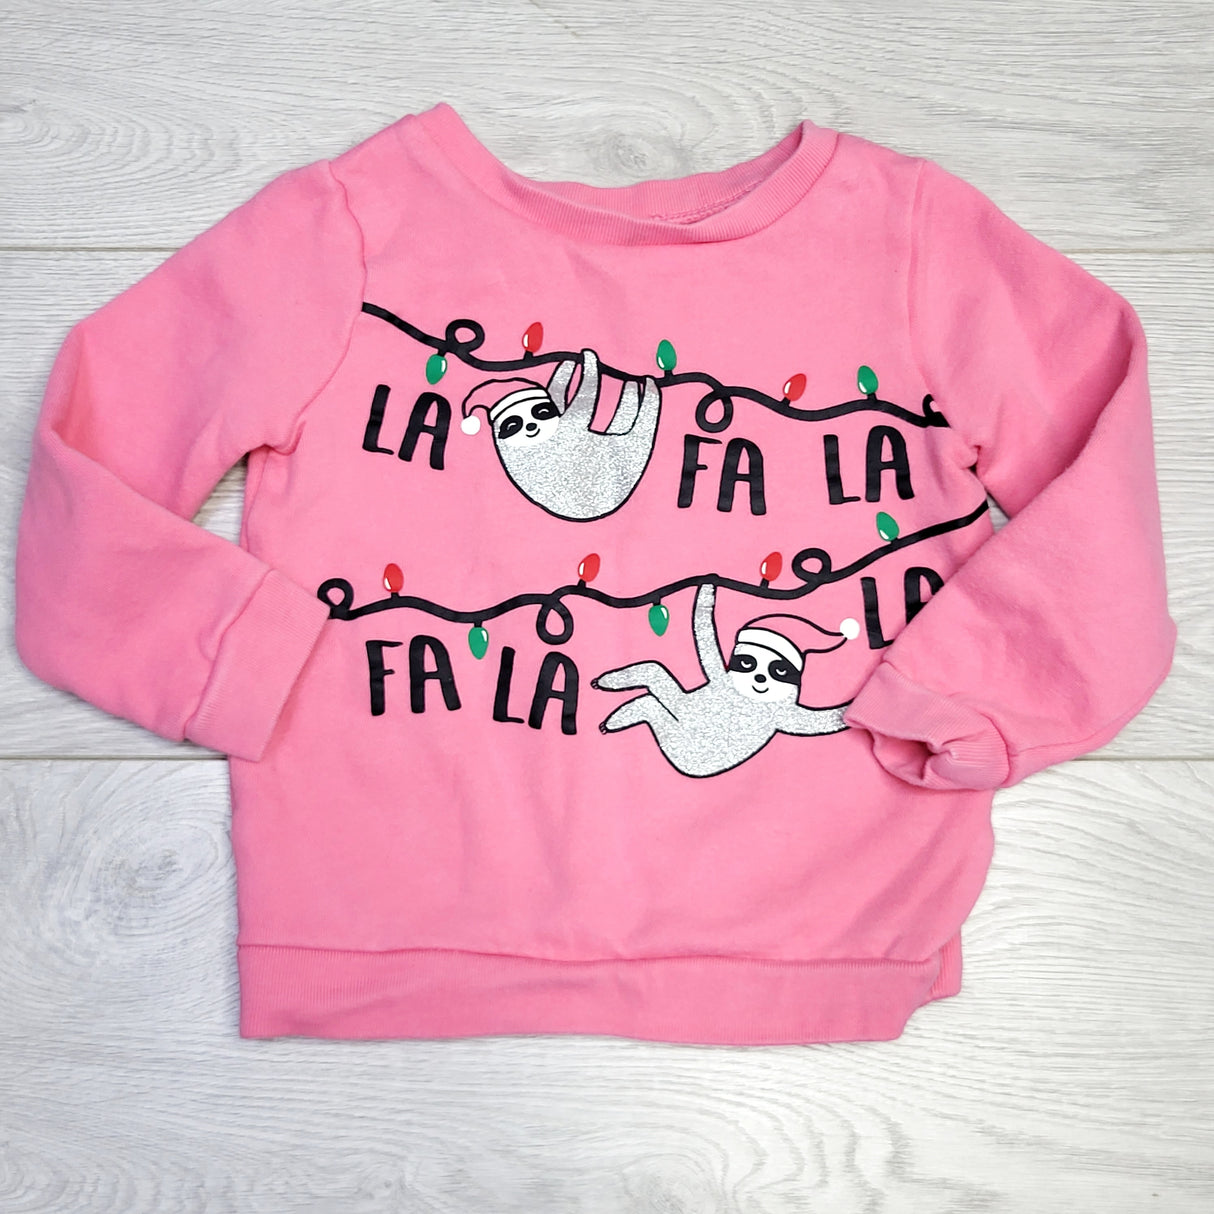 KJHN2 - Carters pink "Fa La La La" sweatshirt. Size 2T